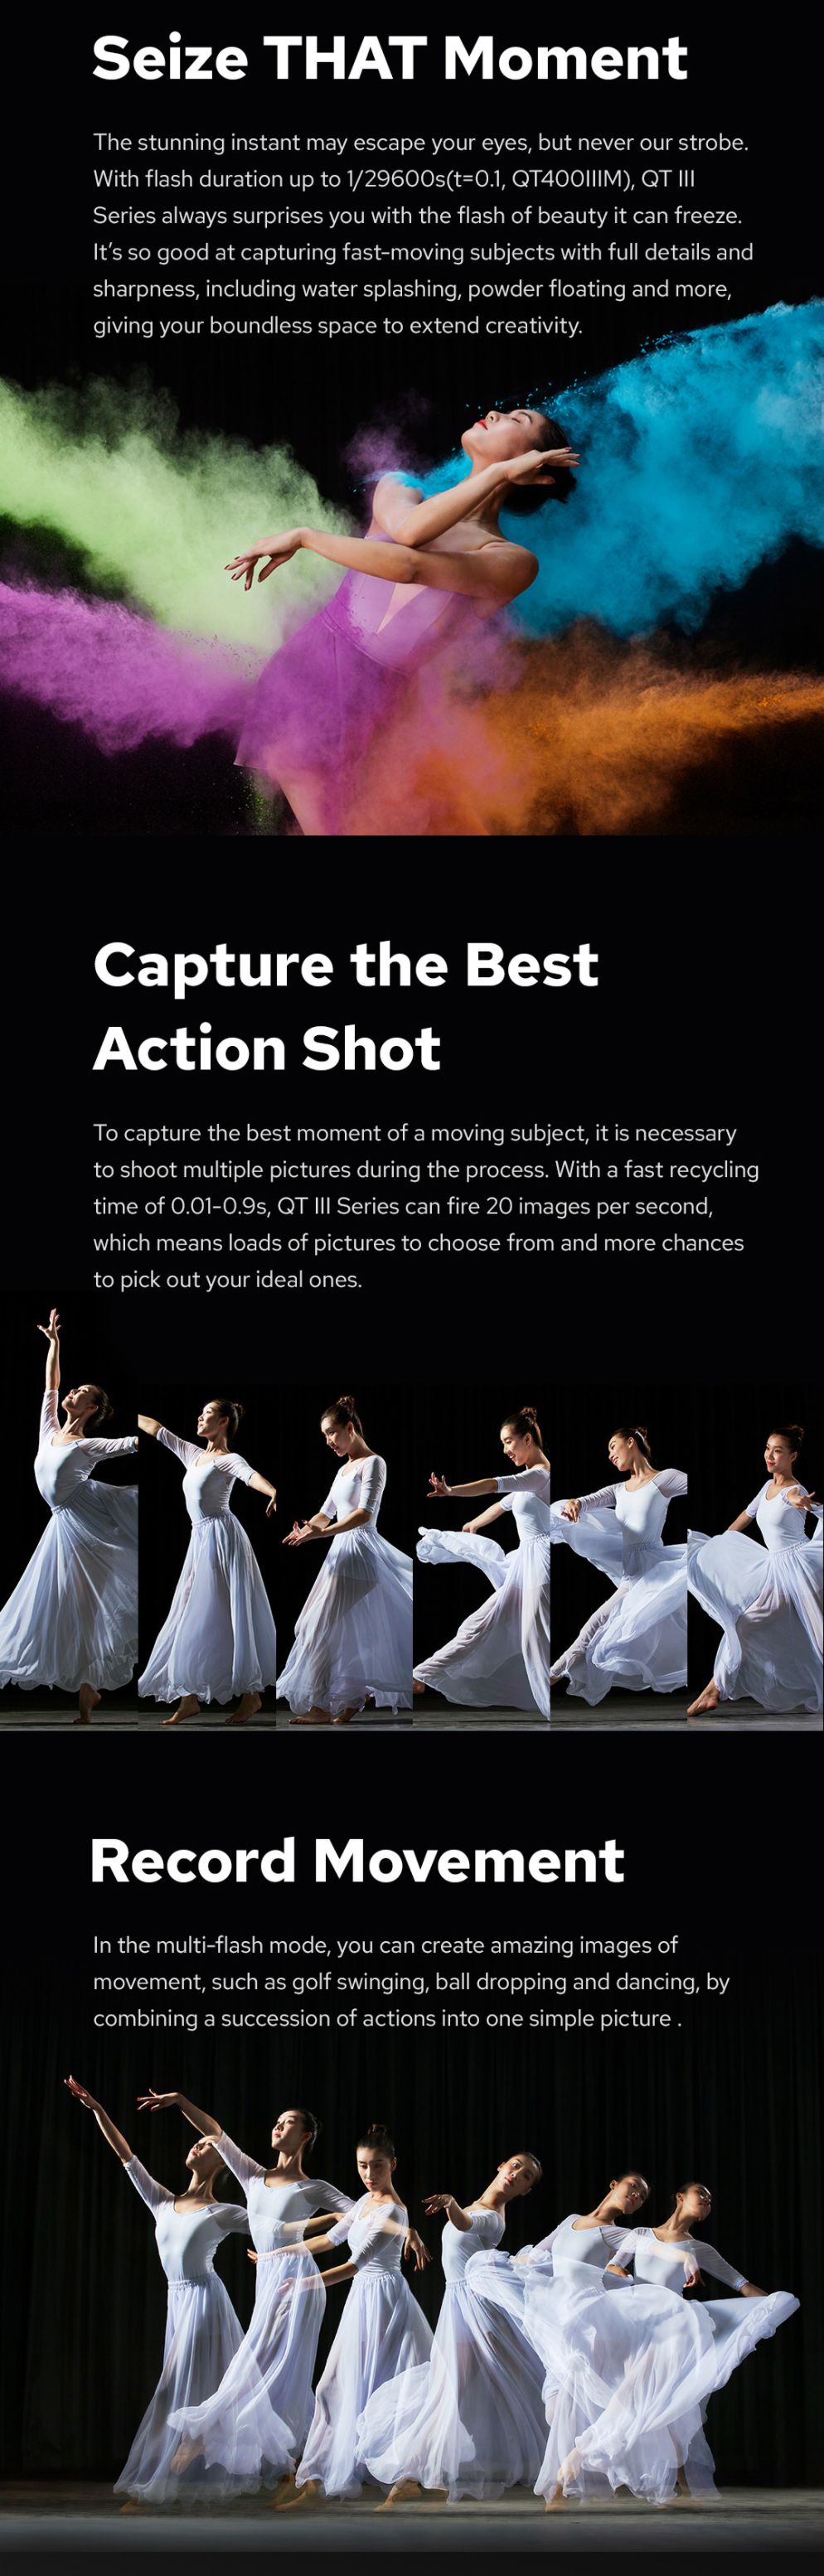 Seize That Moment Capture the Best Action Shot Record Movement